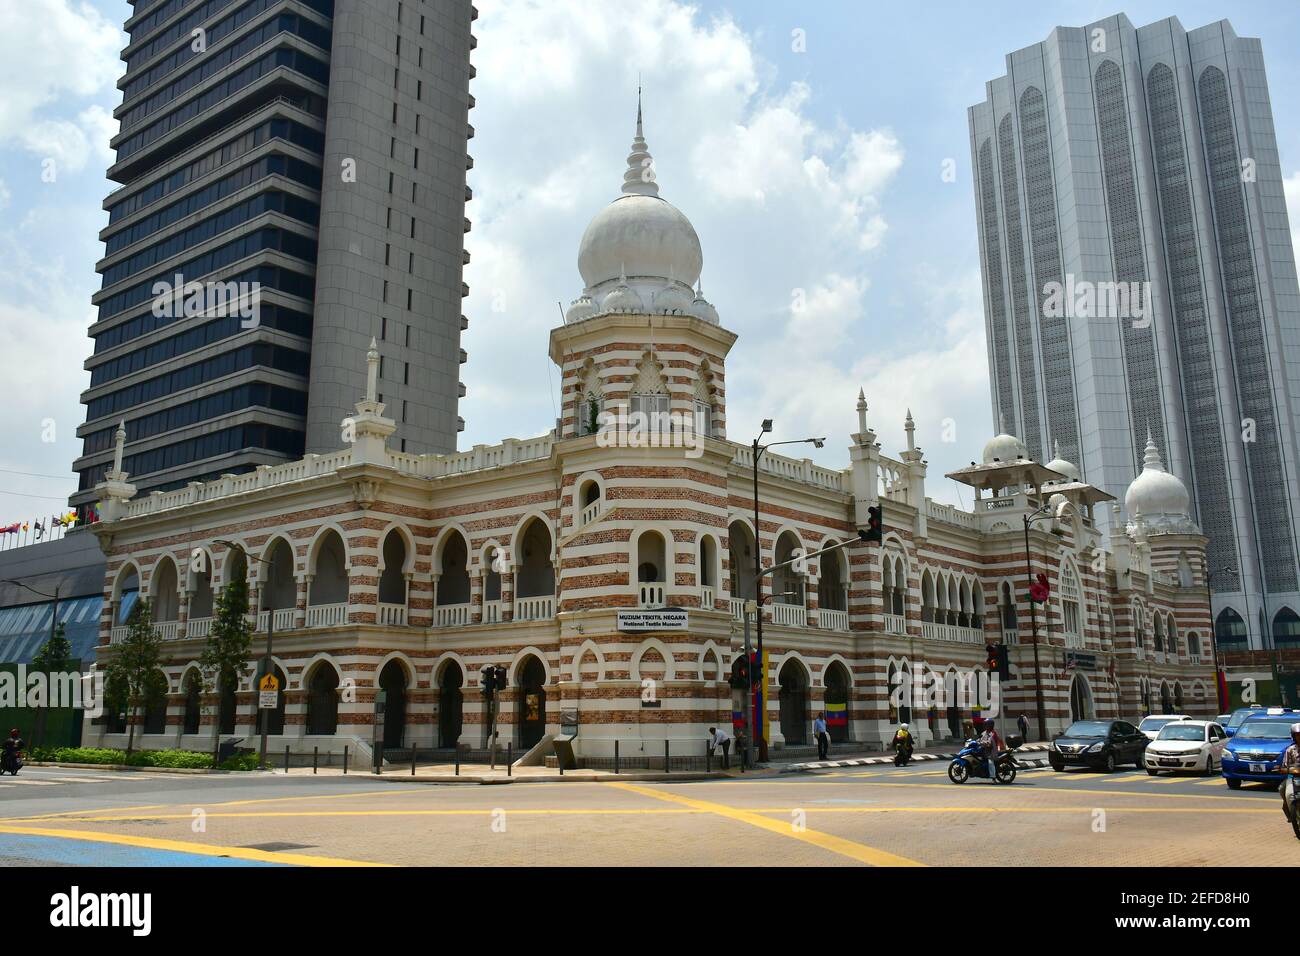 National Textile Museum in Merdeka square, Kuala Lumpur, Malaysia, Southeast Asia Stock Photo